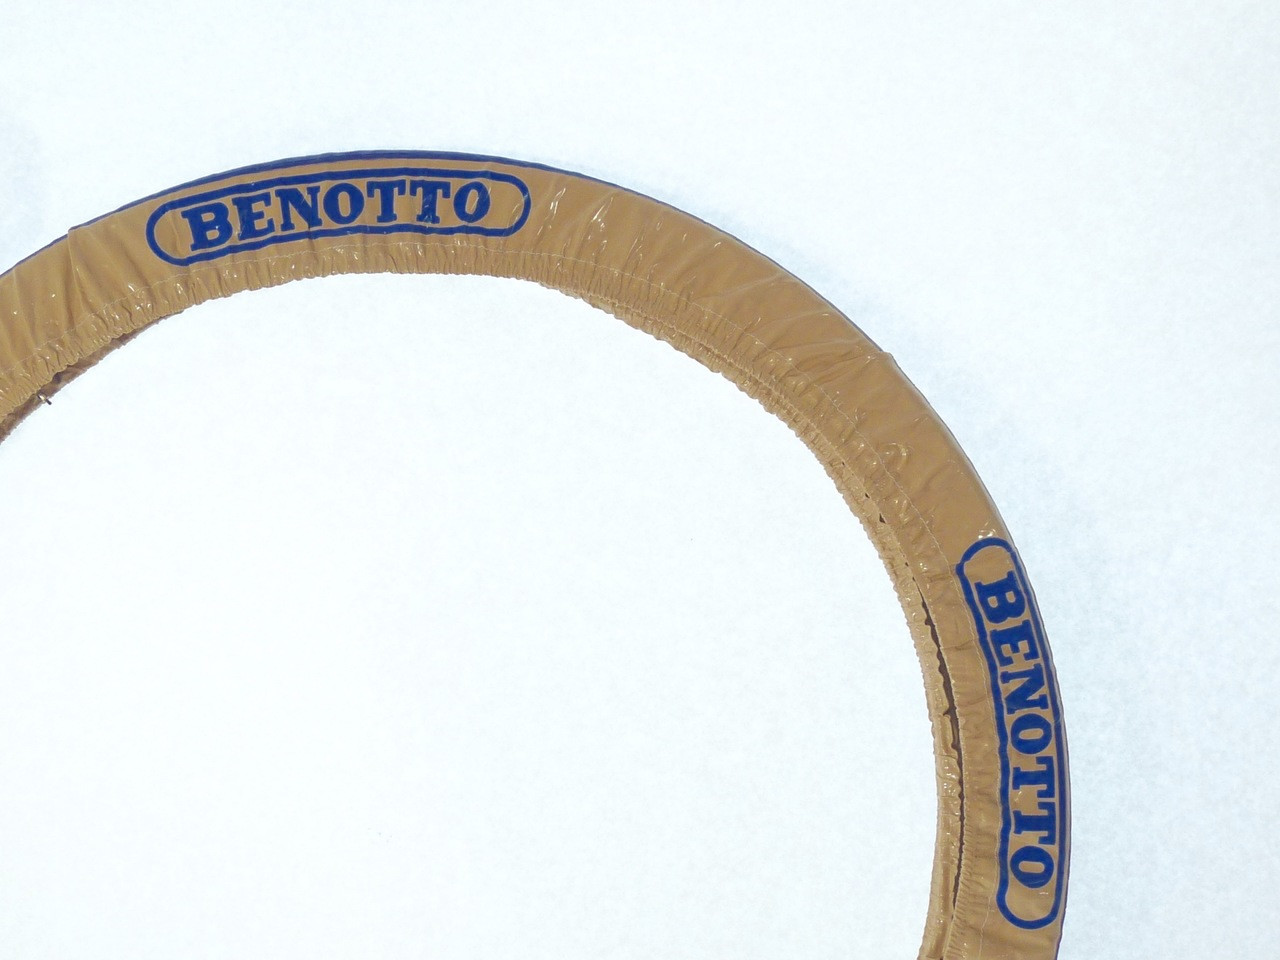 Benotto wheel covers